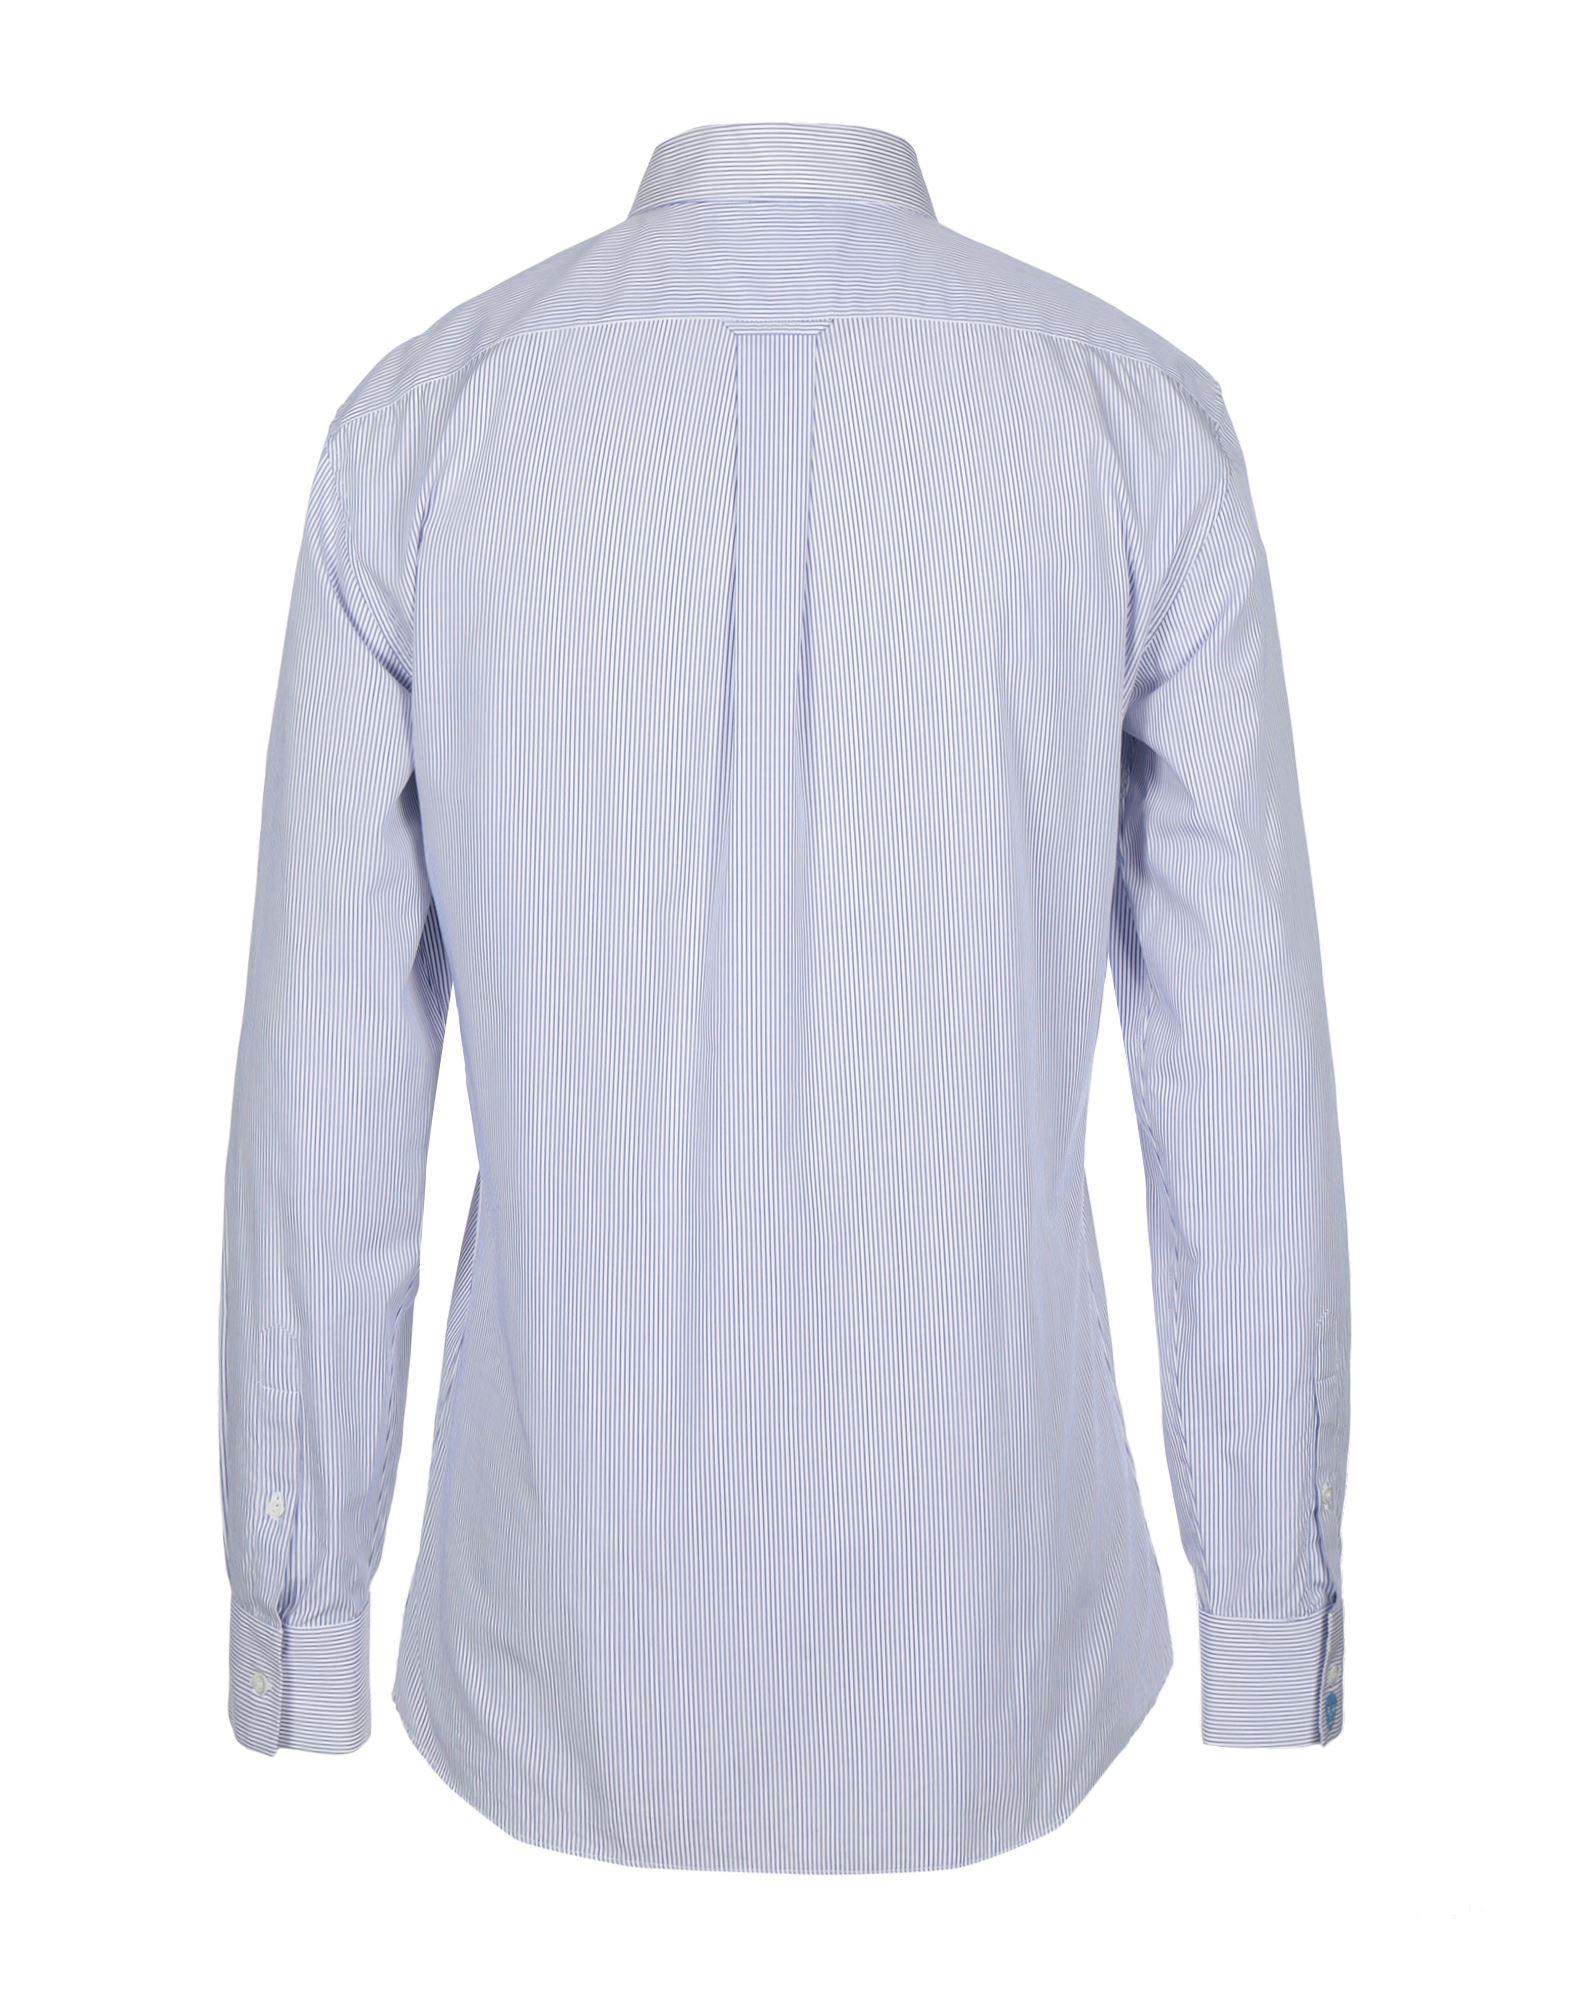 Alexander McQueen Cotton Shirt in Blue for Men - Lyst